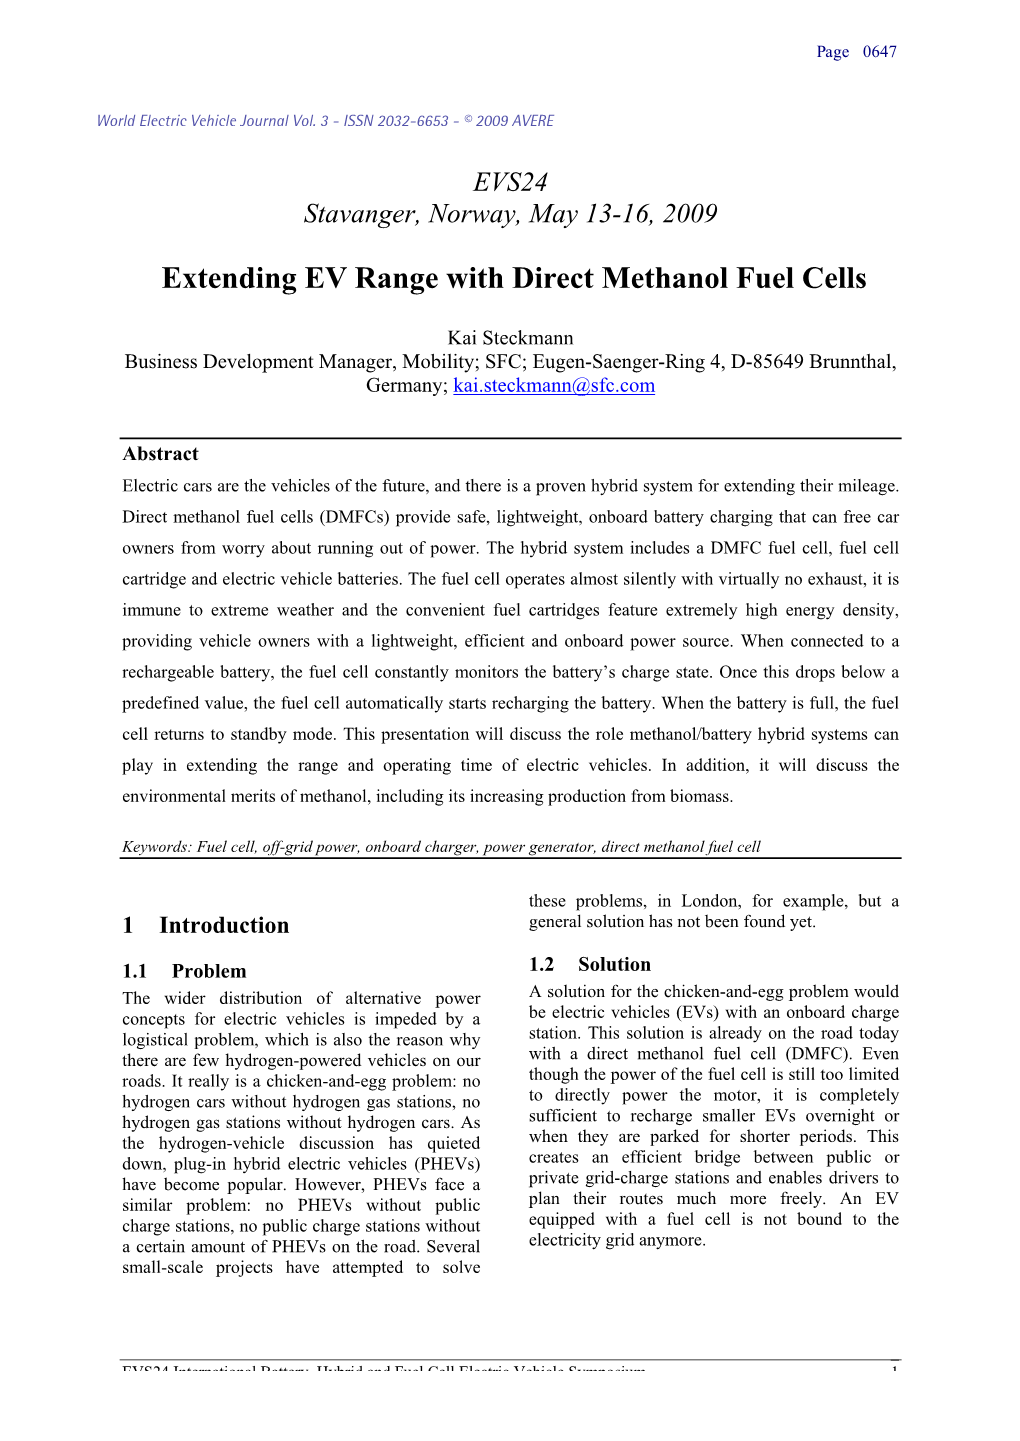 Extending EV Range with Direct Methanol Fuel Cells